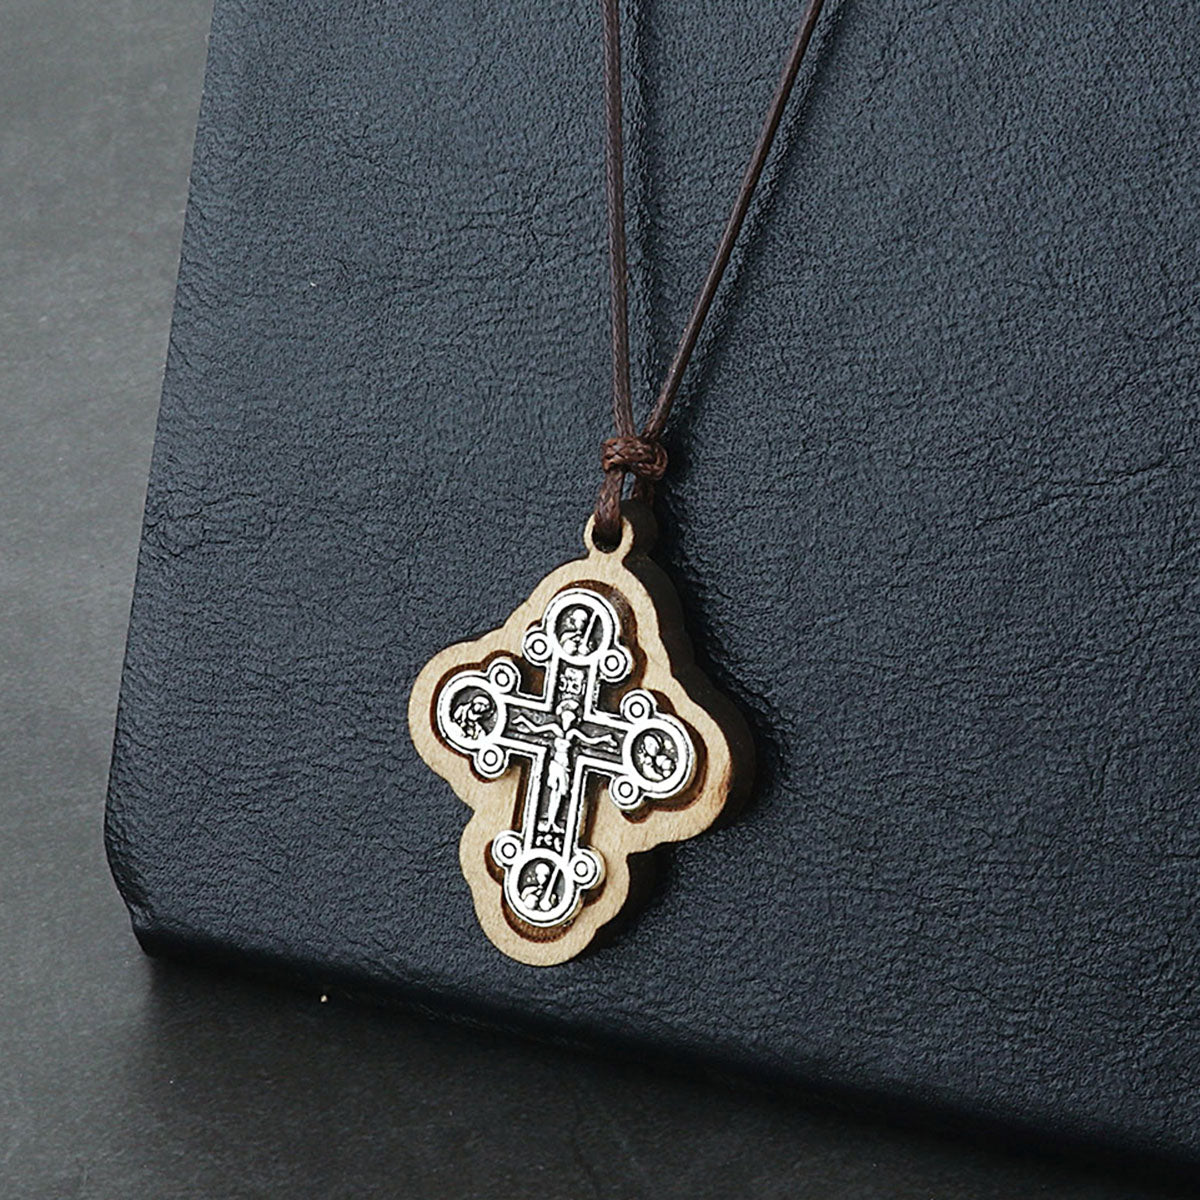 Small Wooden Cross Christianity Necklace Pendant Chain wood crucifix  Armenian | eBay